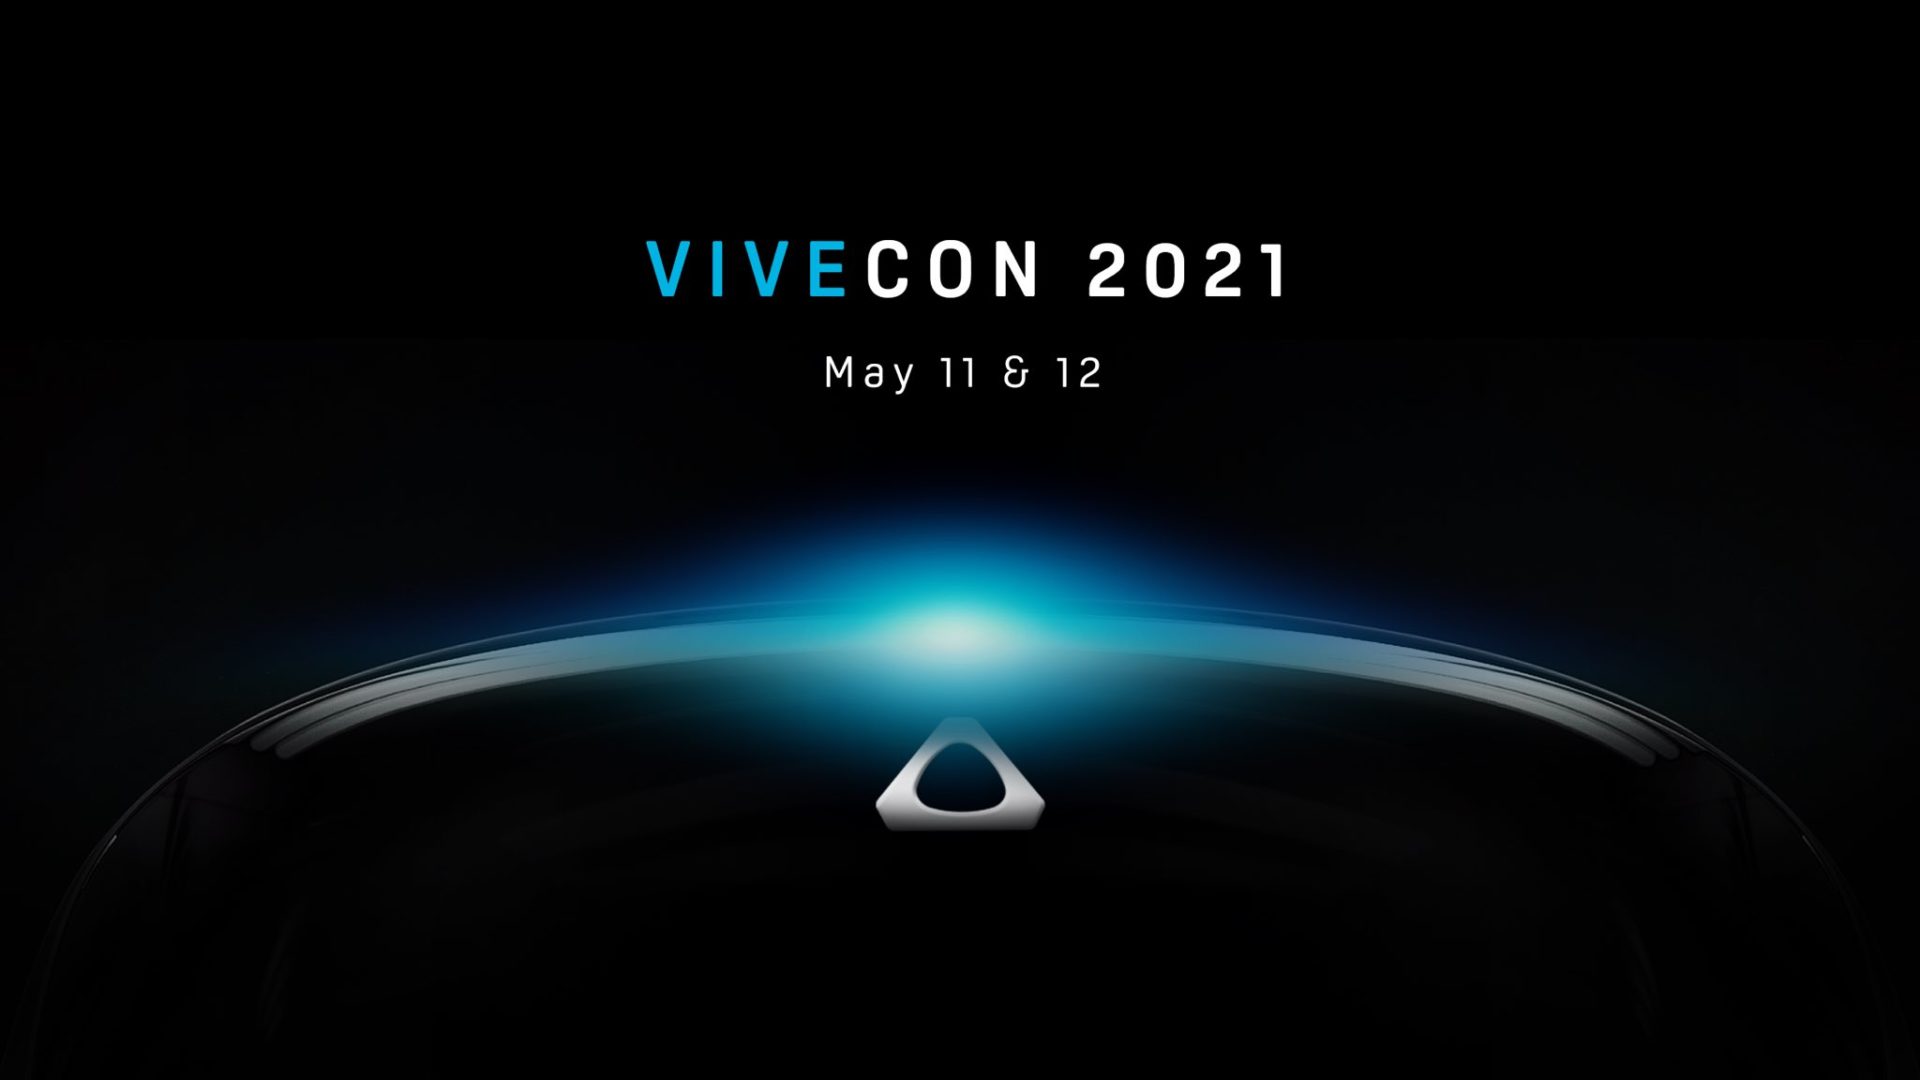 HTC เตรียมเปิดตัว ‘Vive headset’ แว่น VR เสมือนจริง 2 รุ่นในงาน VIVECON สัปดาห์หน้า